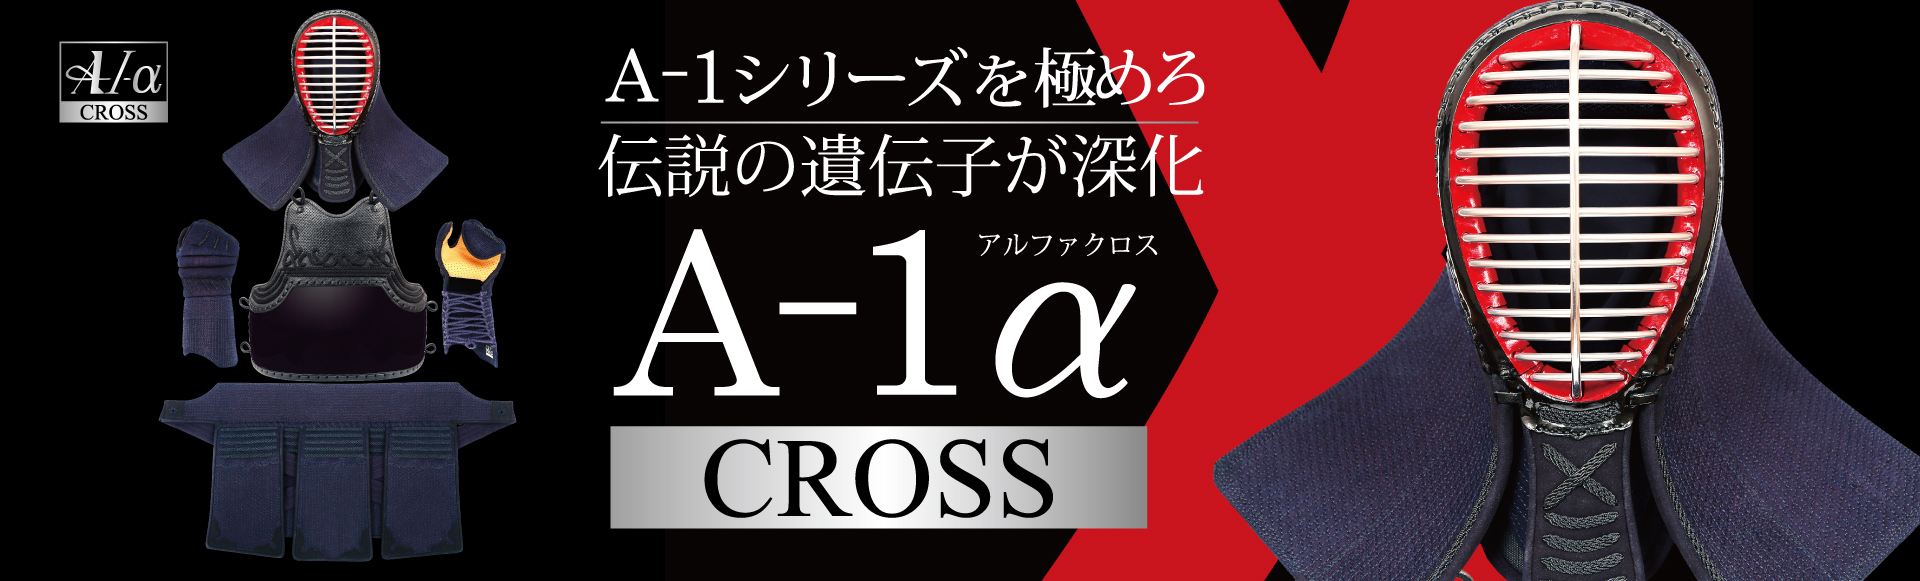 A-1αCross剣道防具